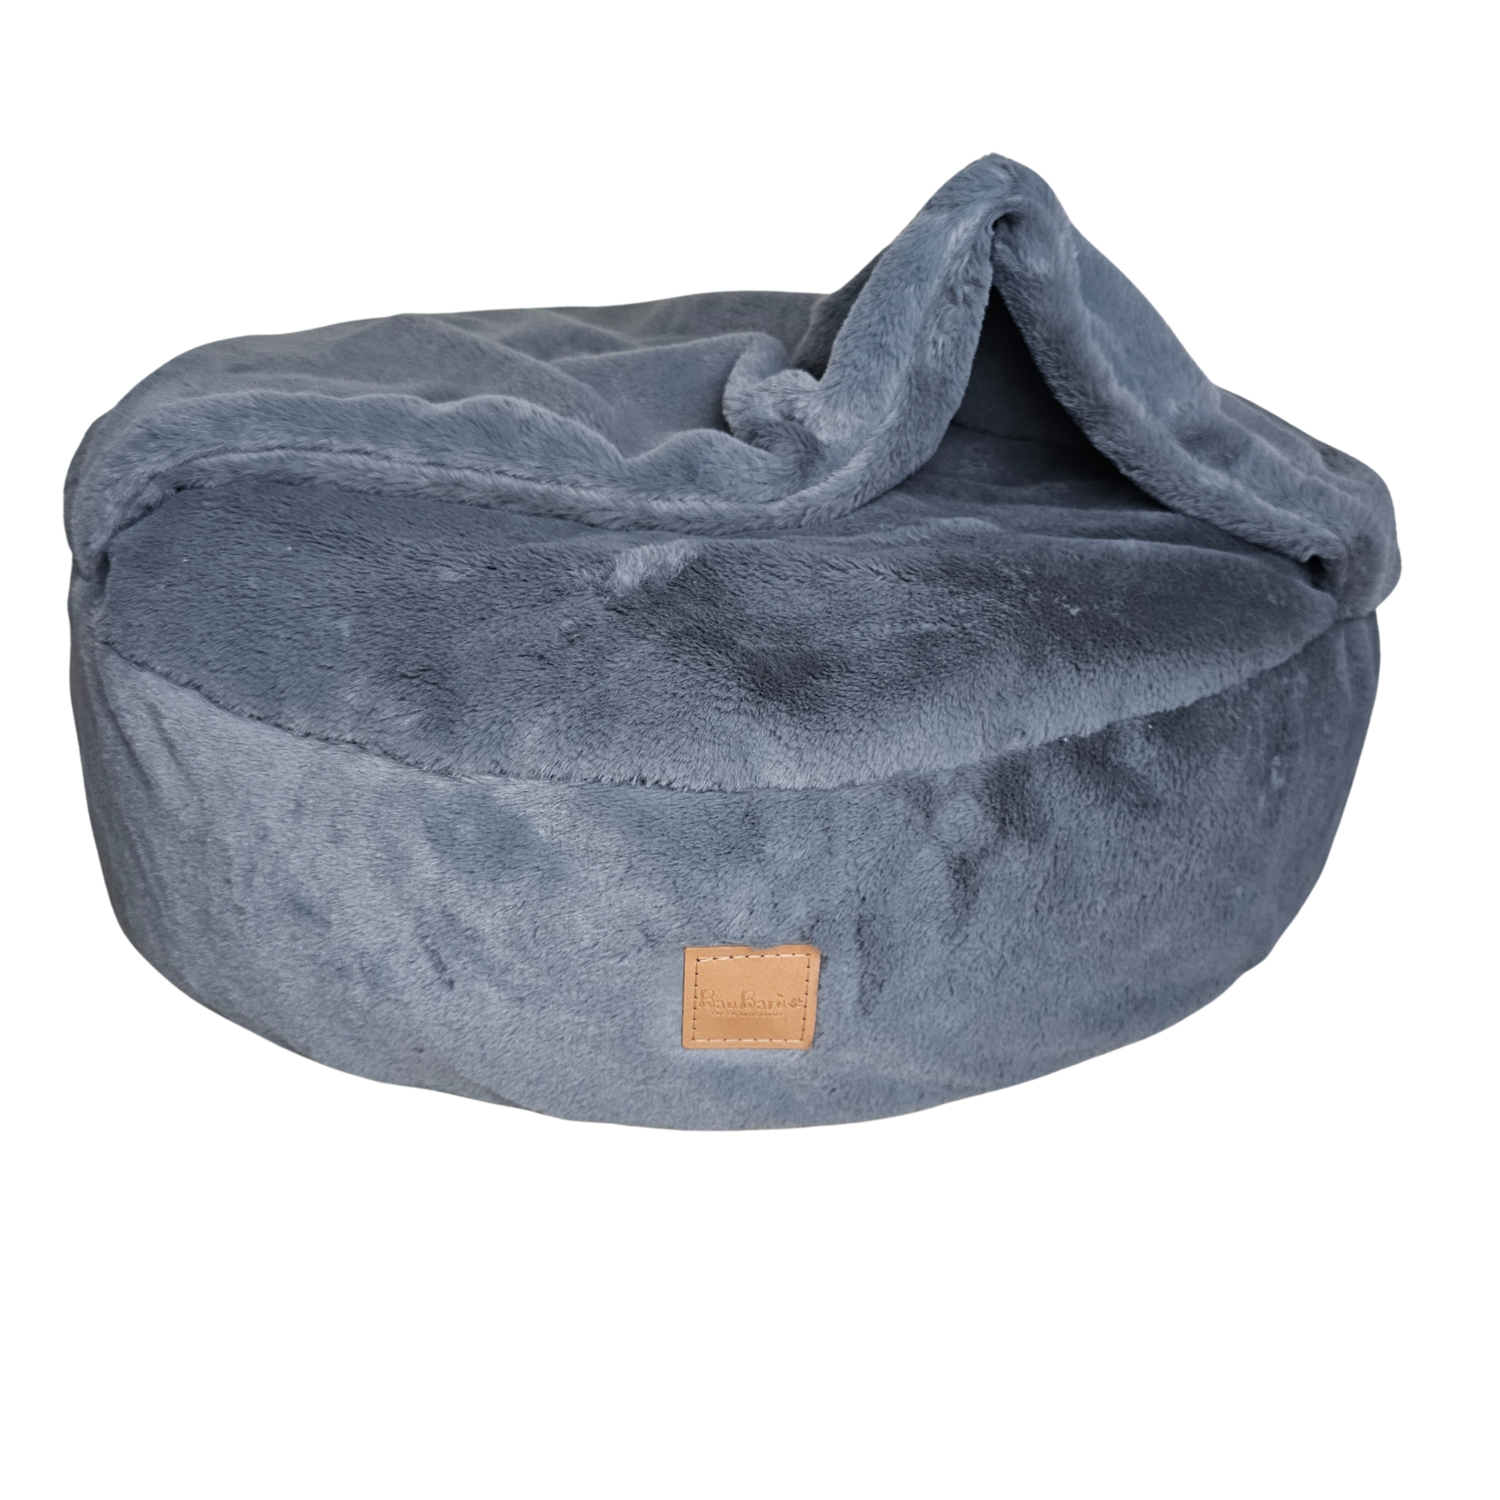 Cave bed castorino Grey, Size: 65cm